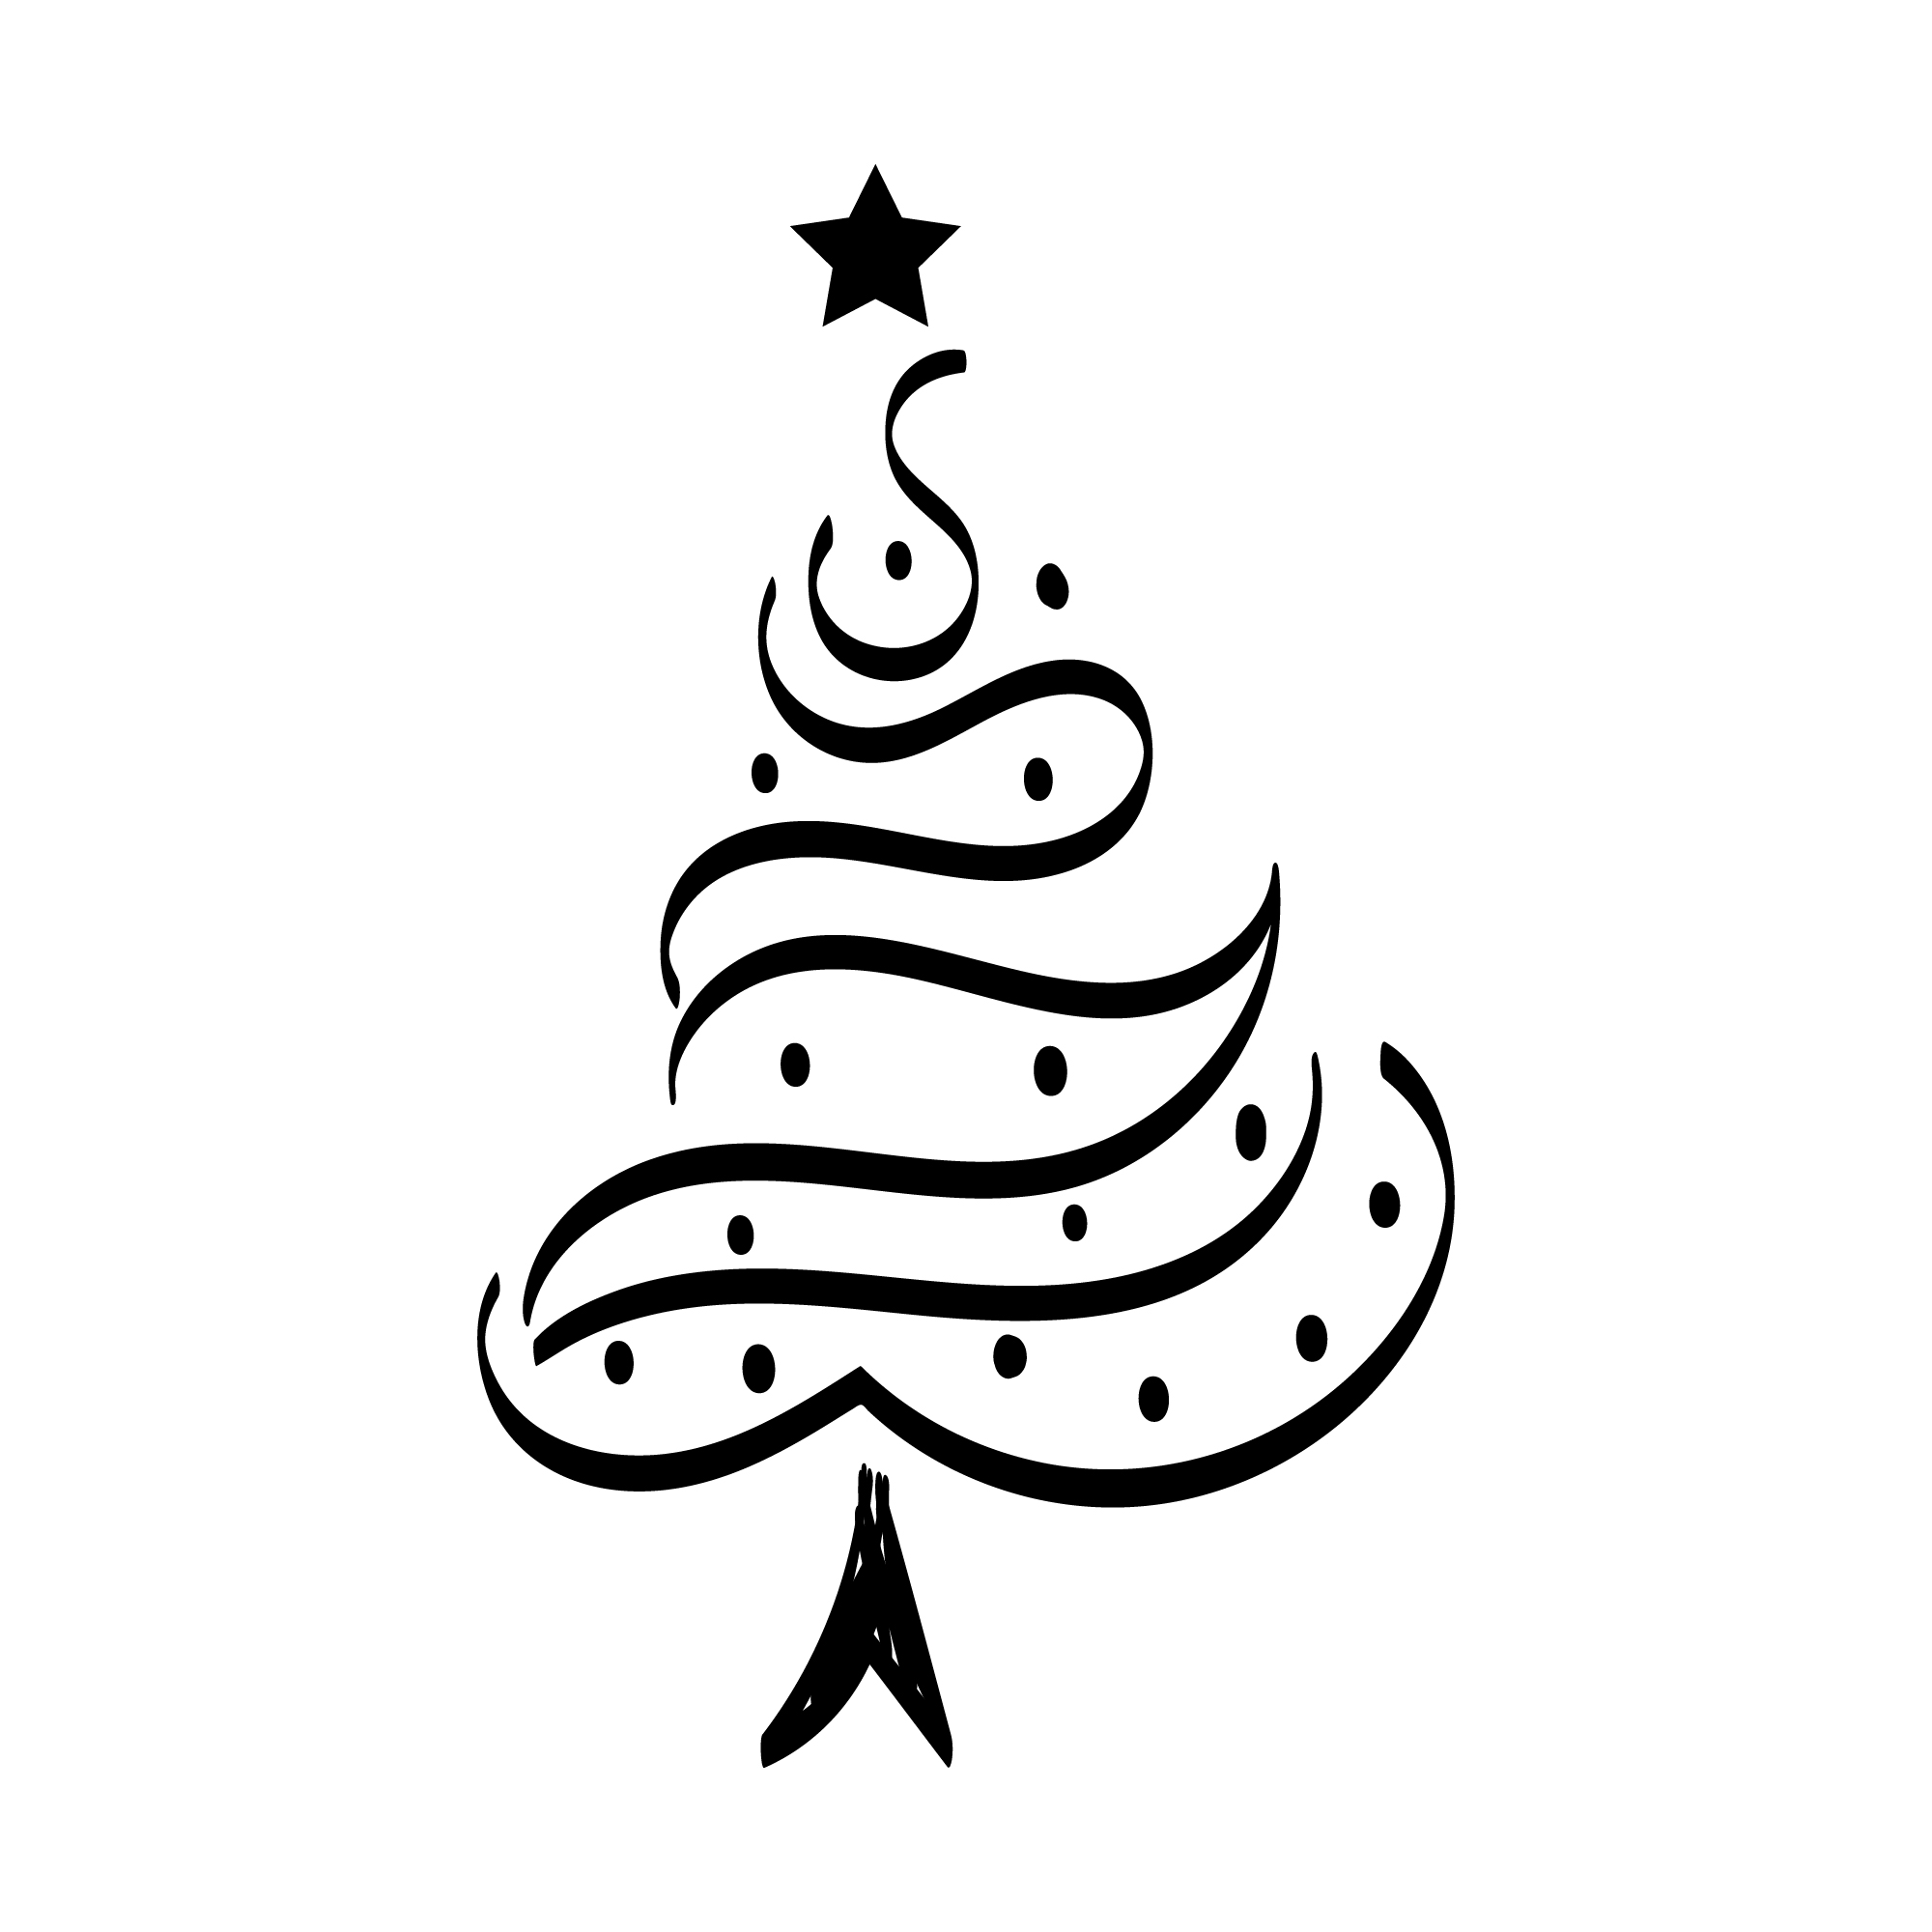 Tree Christmas Design preview image.